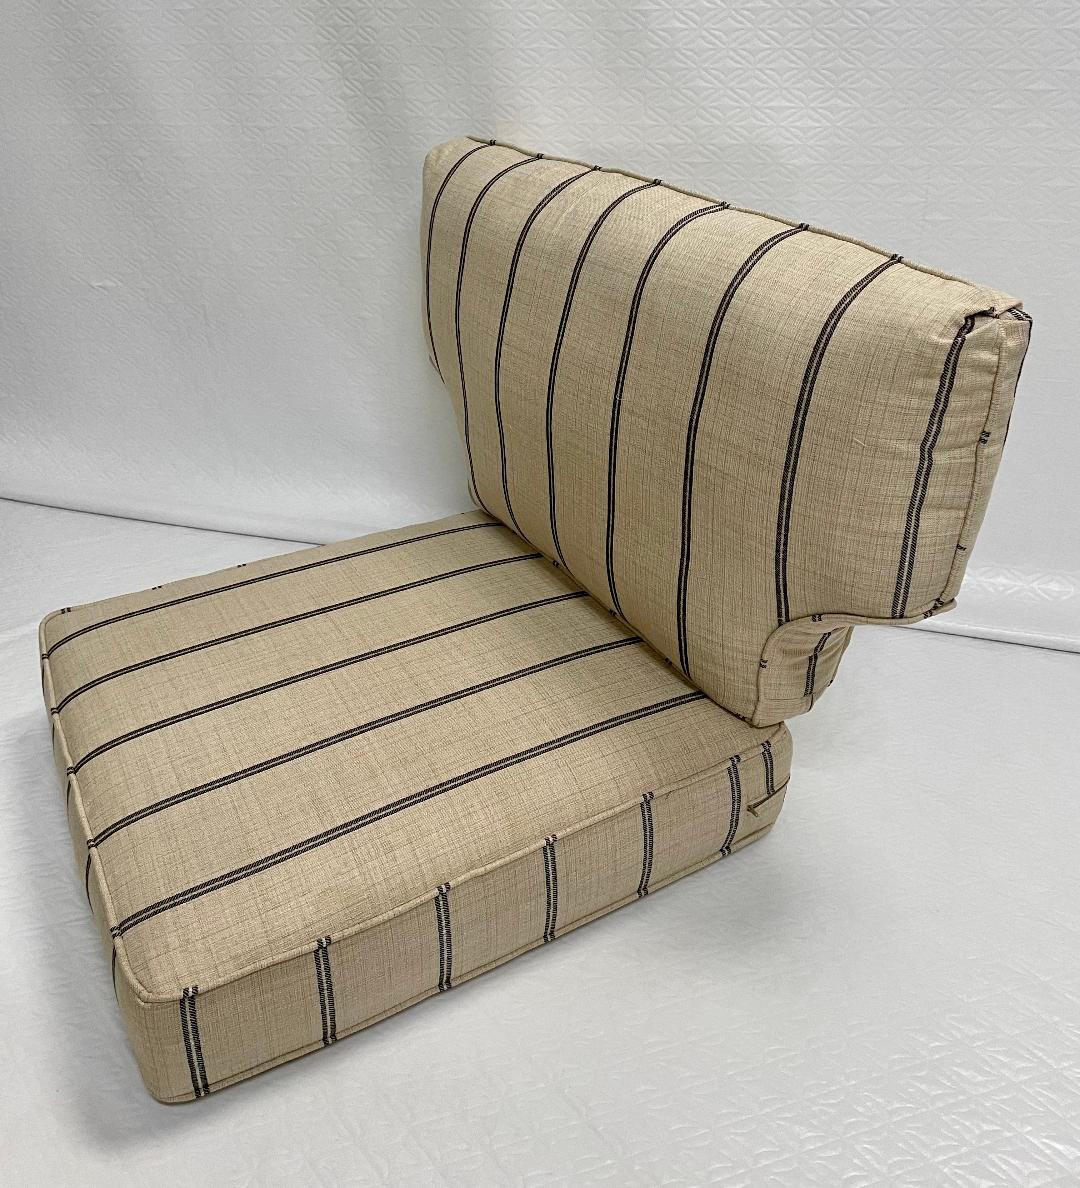 Custom-made Rectangle/Square Boat Cushions